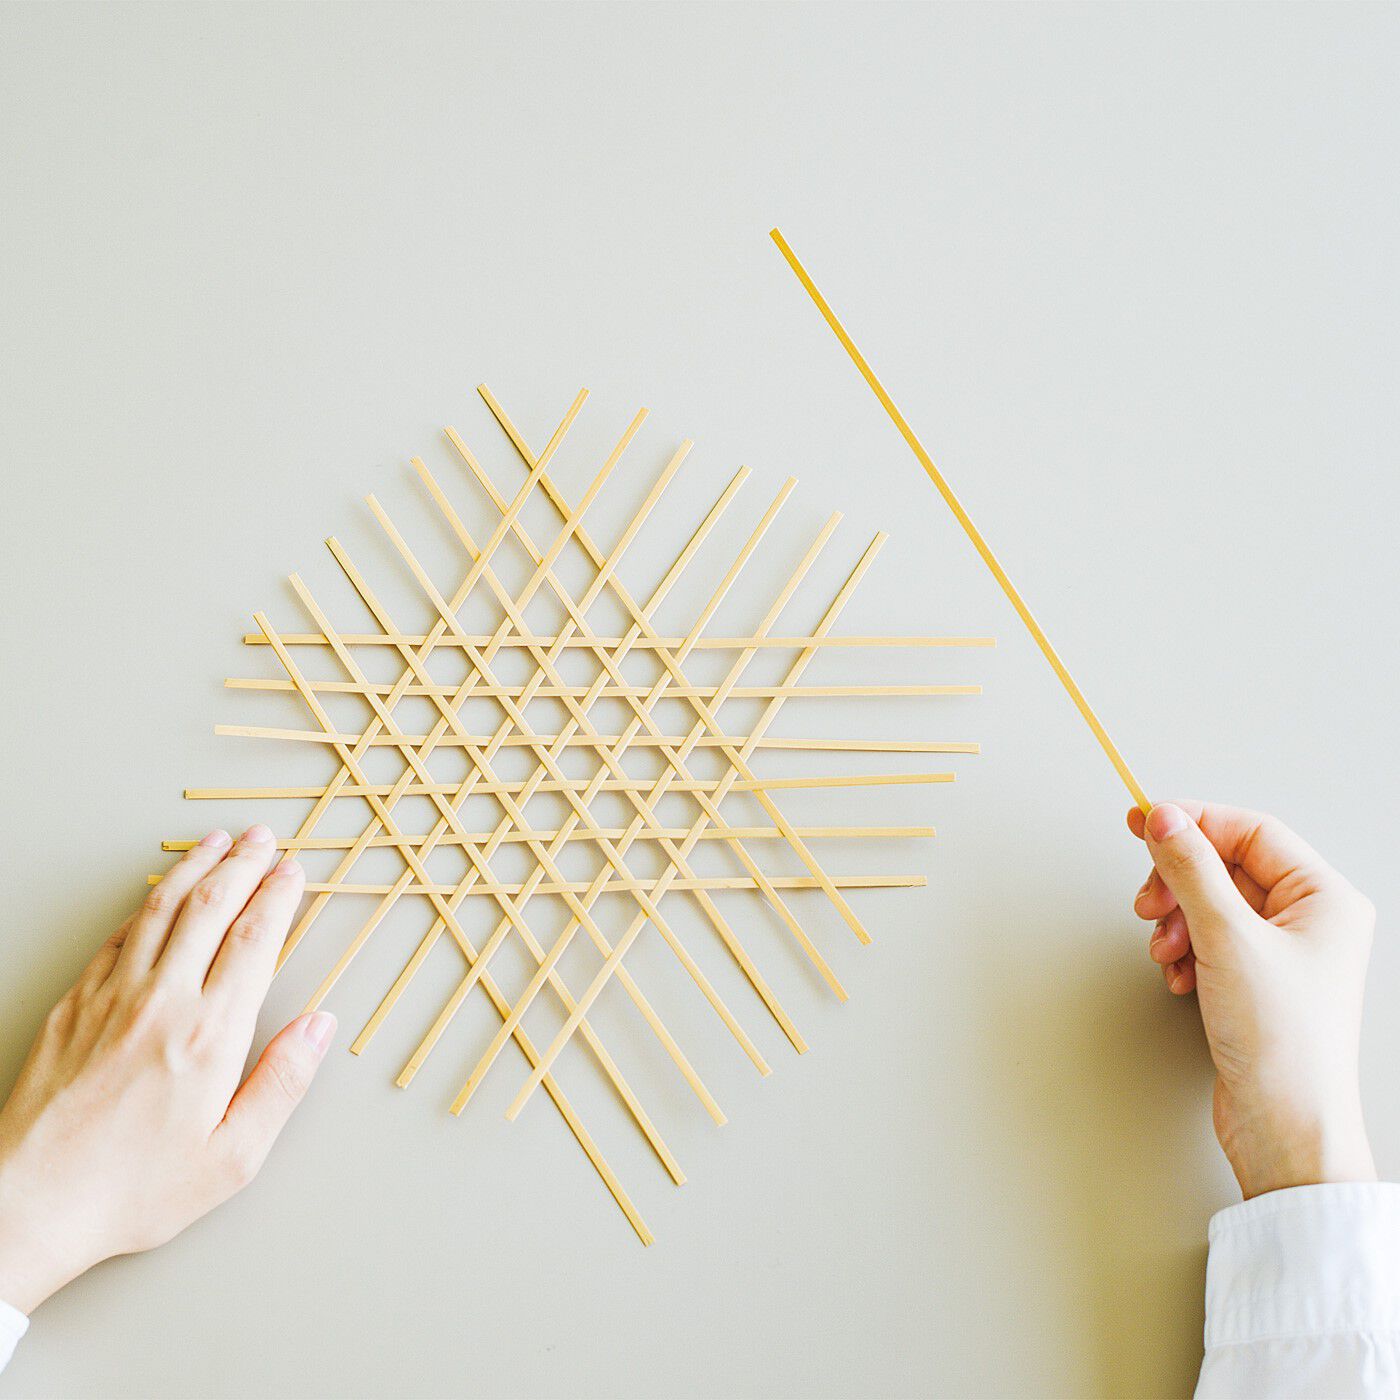 SeeMONO|日本の伝統工芸にふれる　竹細工のインテリアフレームキットの会|1.ていねいに加工処理された竹ひごを組んでいきます。